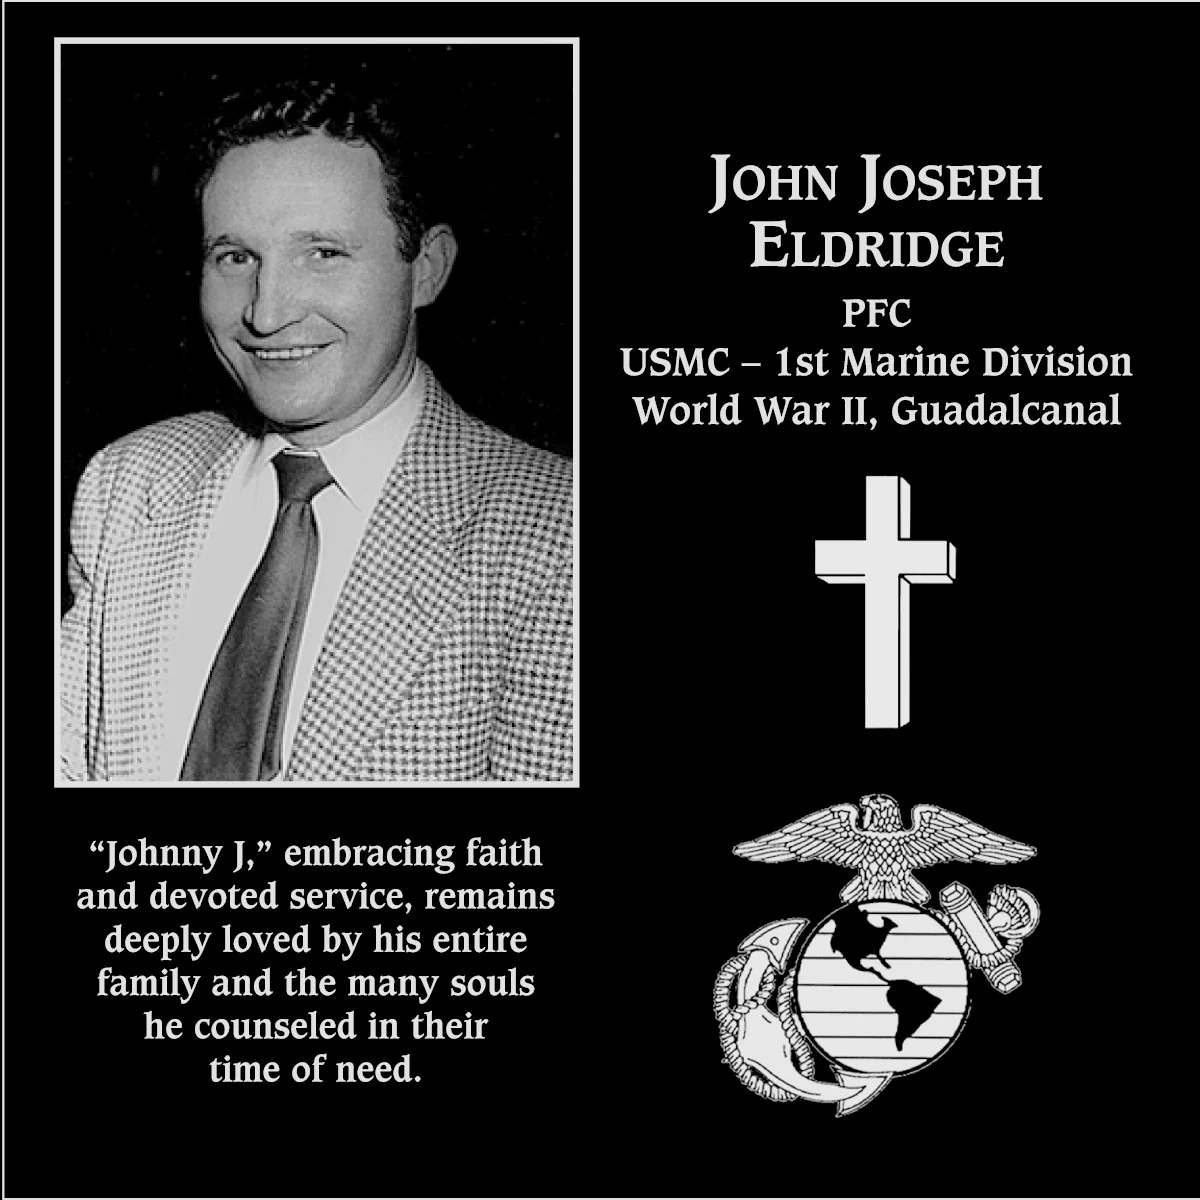 John Joeseph Eldridge